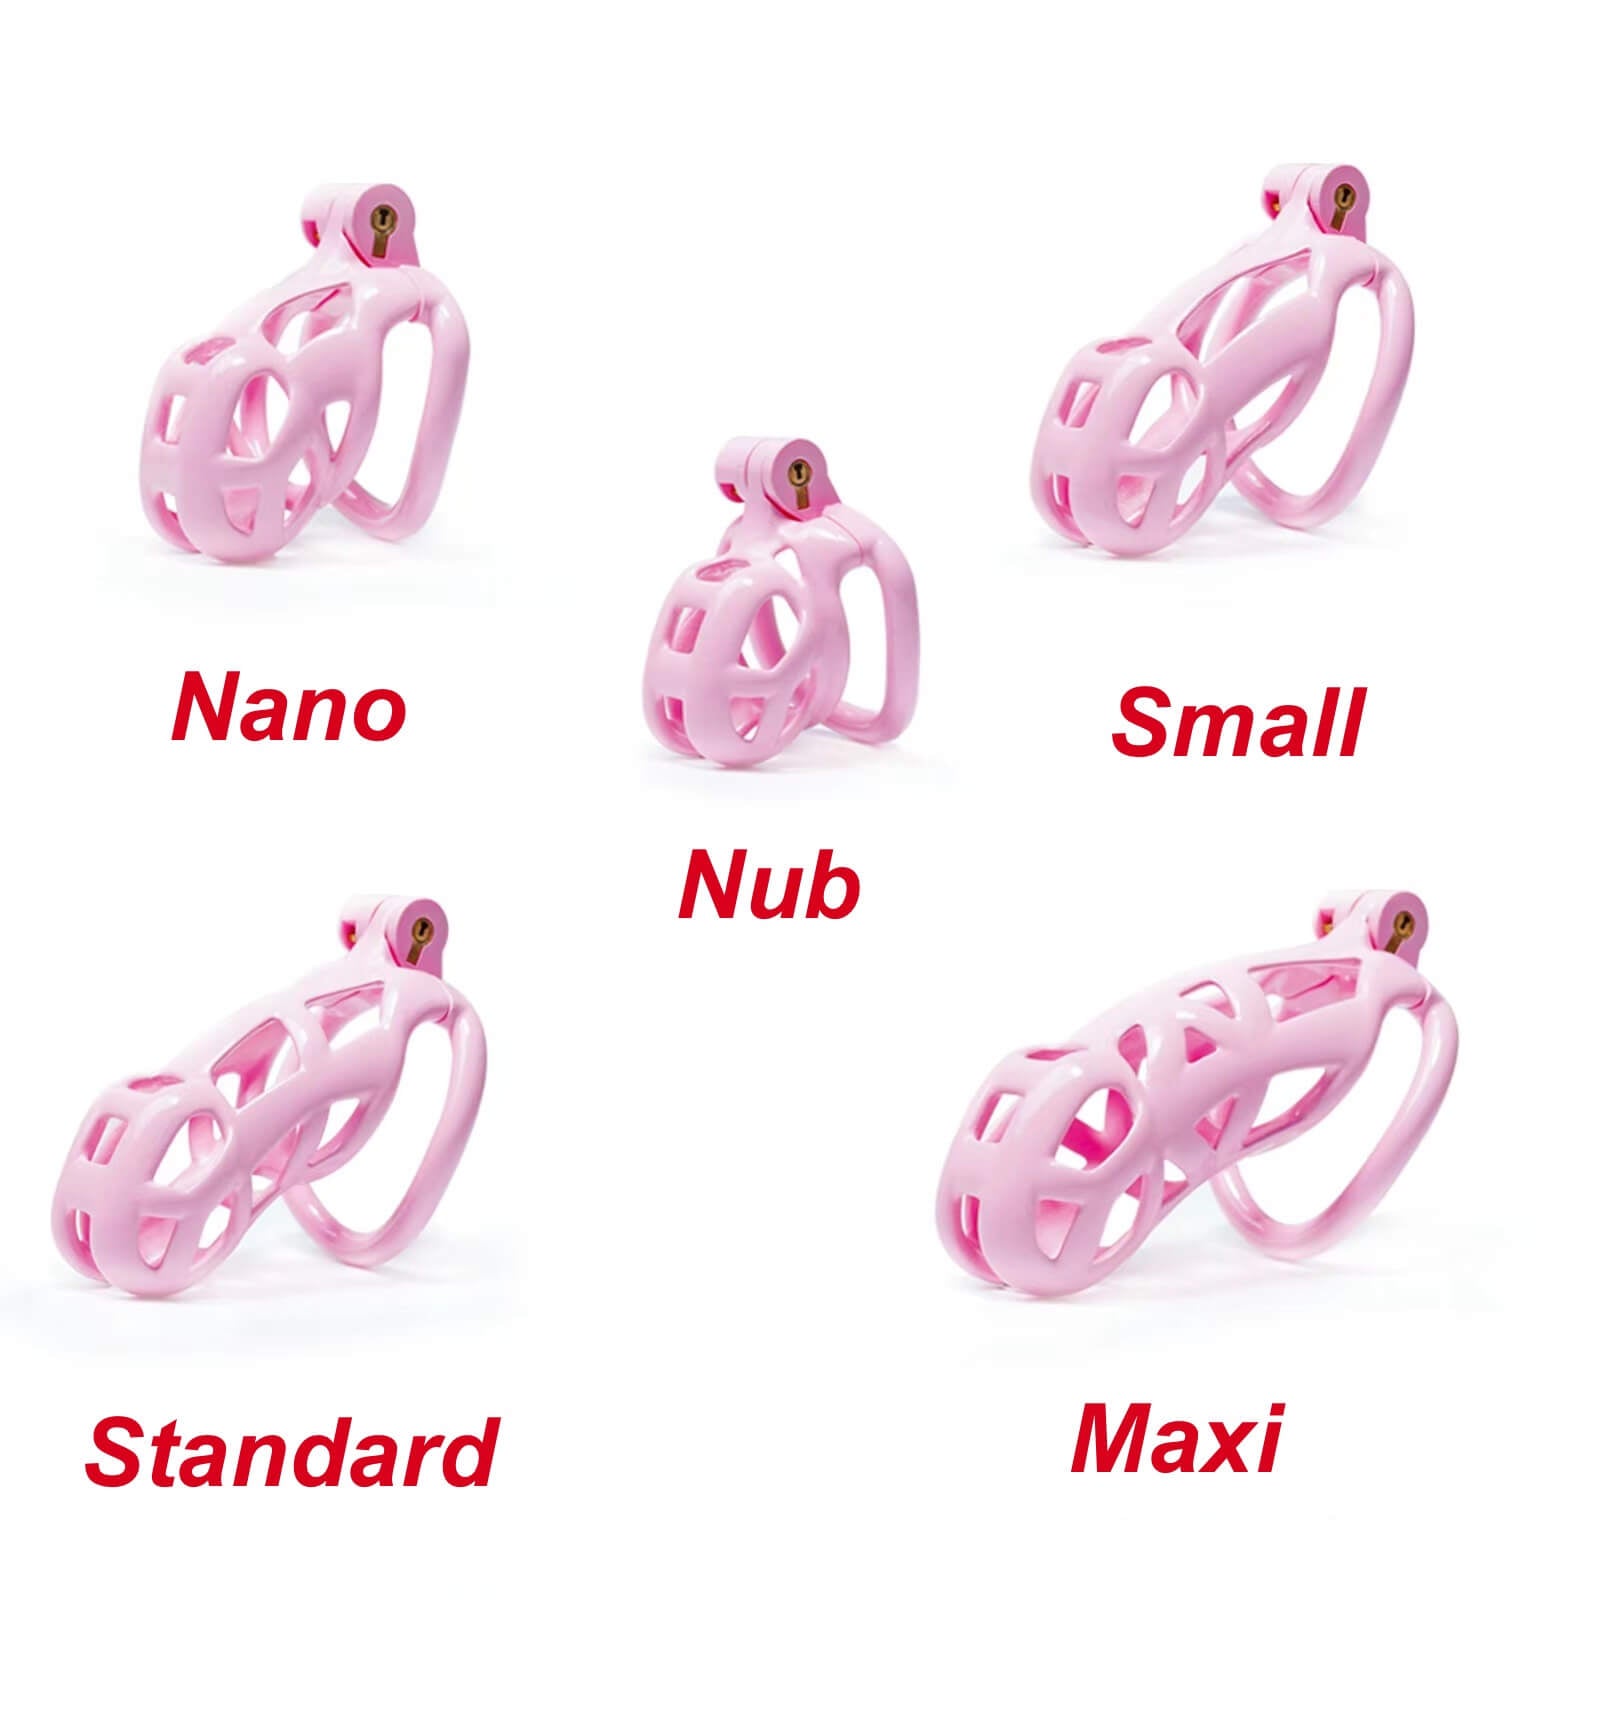 Small Pink Cobra Male Chastity Cage Kits – cobrachastity